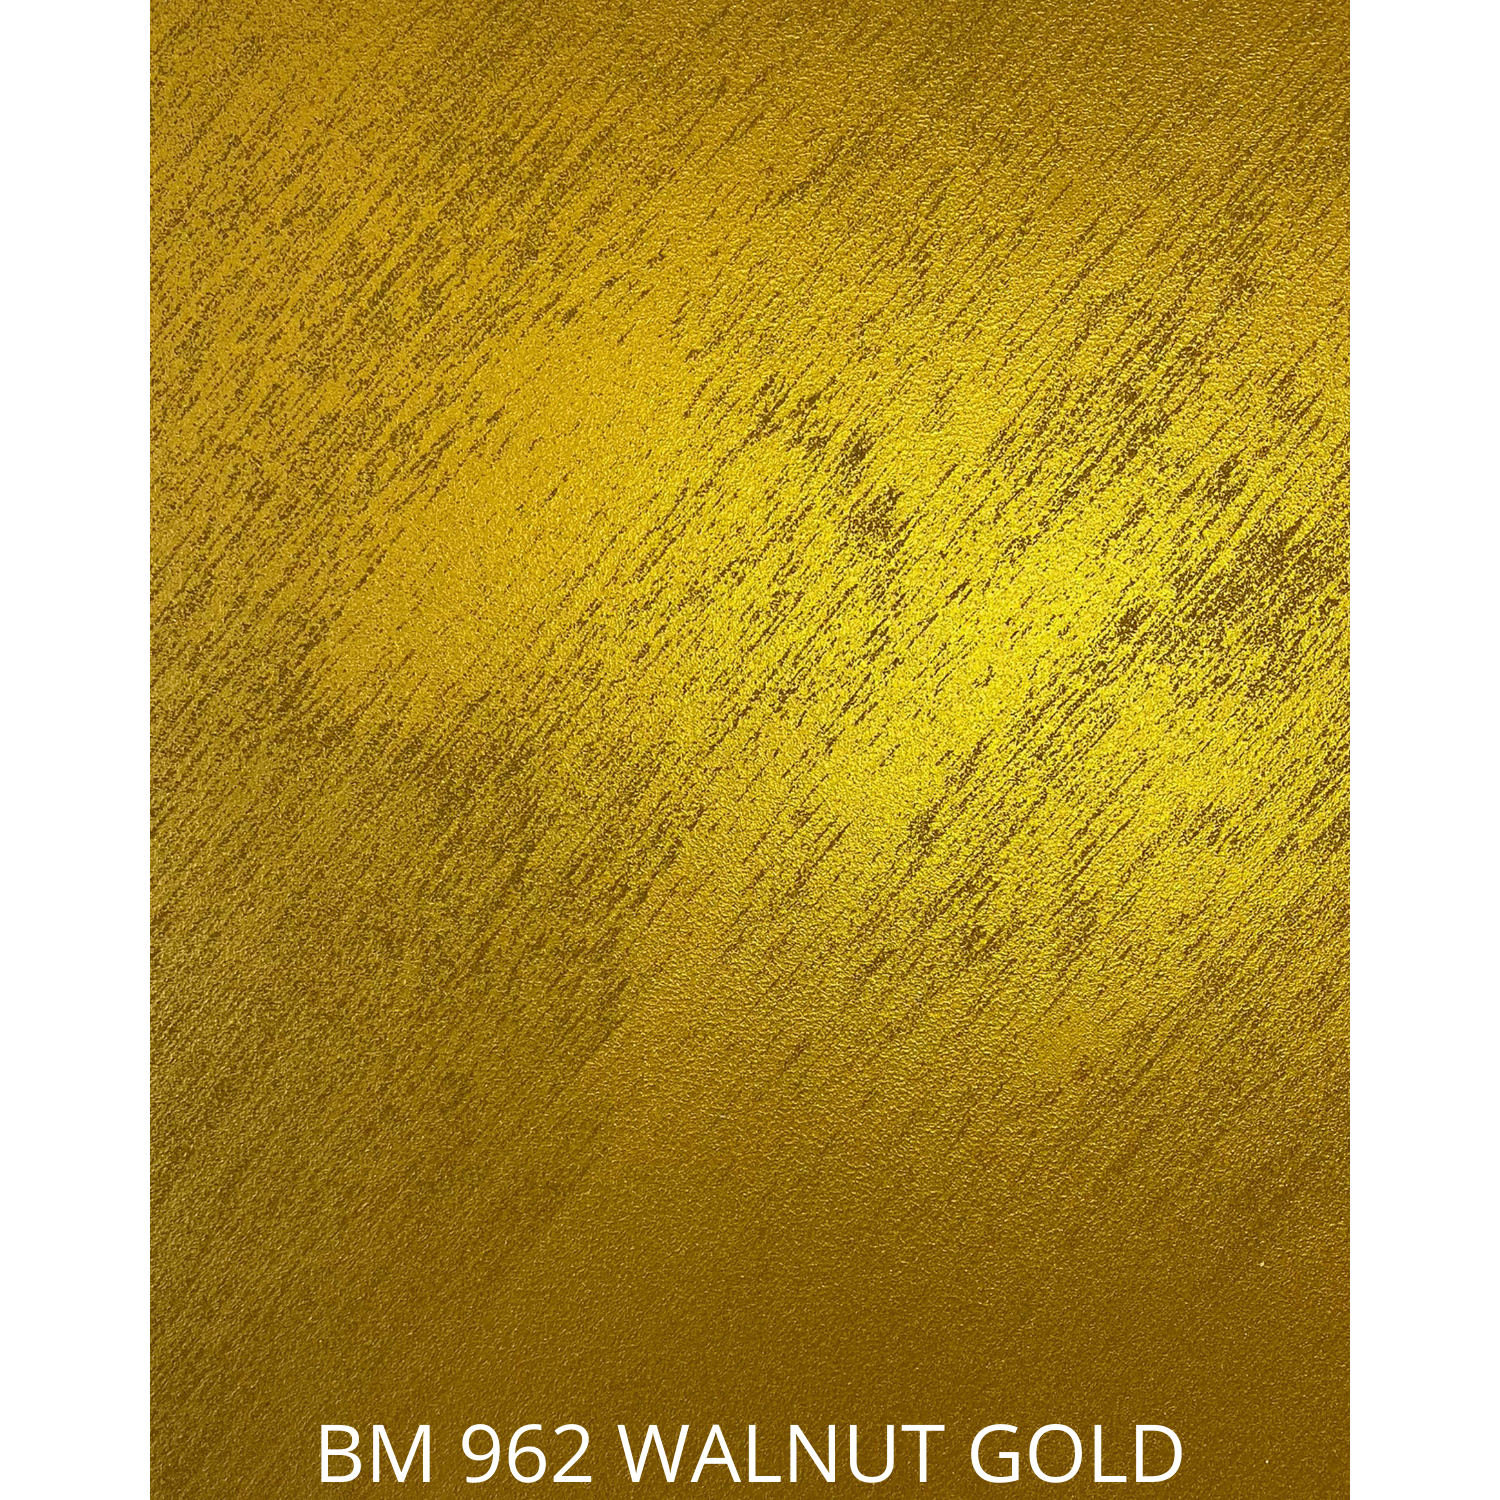 BM 962 WALNUT GOLD